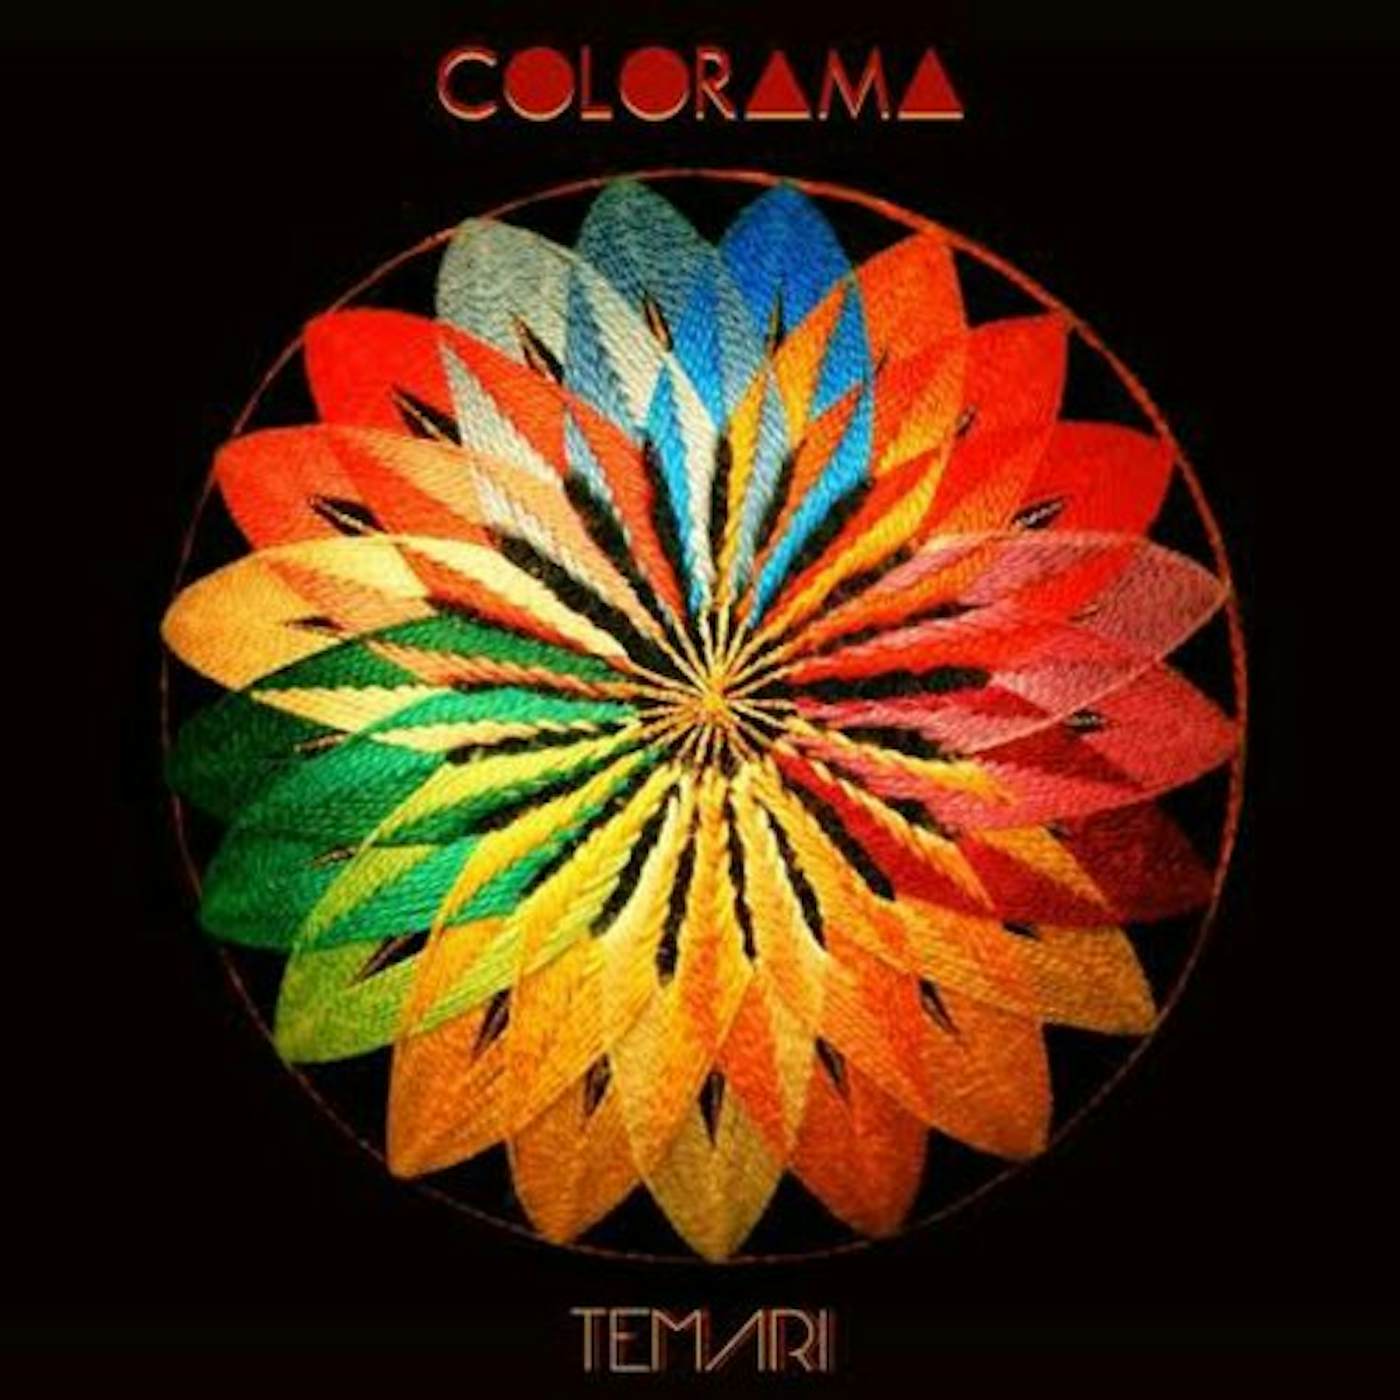 Colorama Temari Vinyl Record